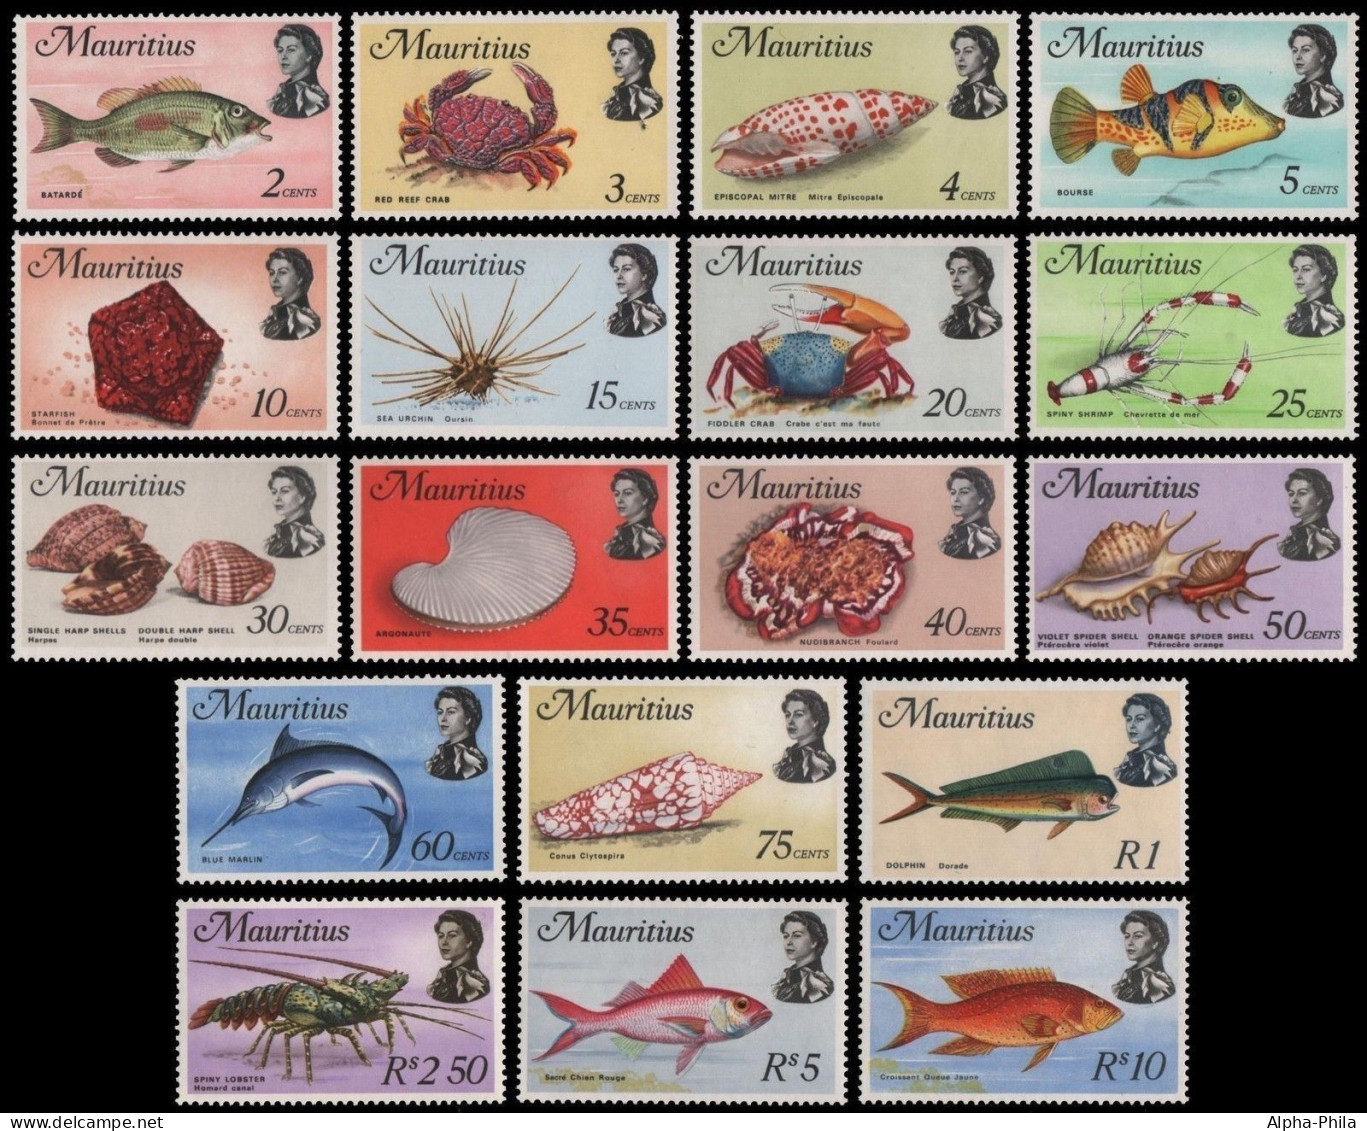 Mauritius 1969 - Mi-Nr. 331-348 ** - MNH - Fische / Fish - Maurice (1968-...)